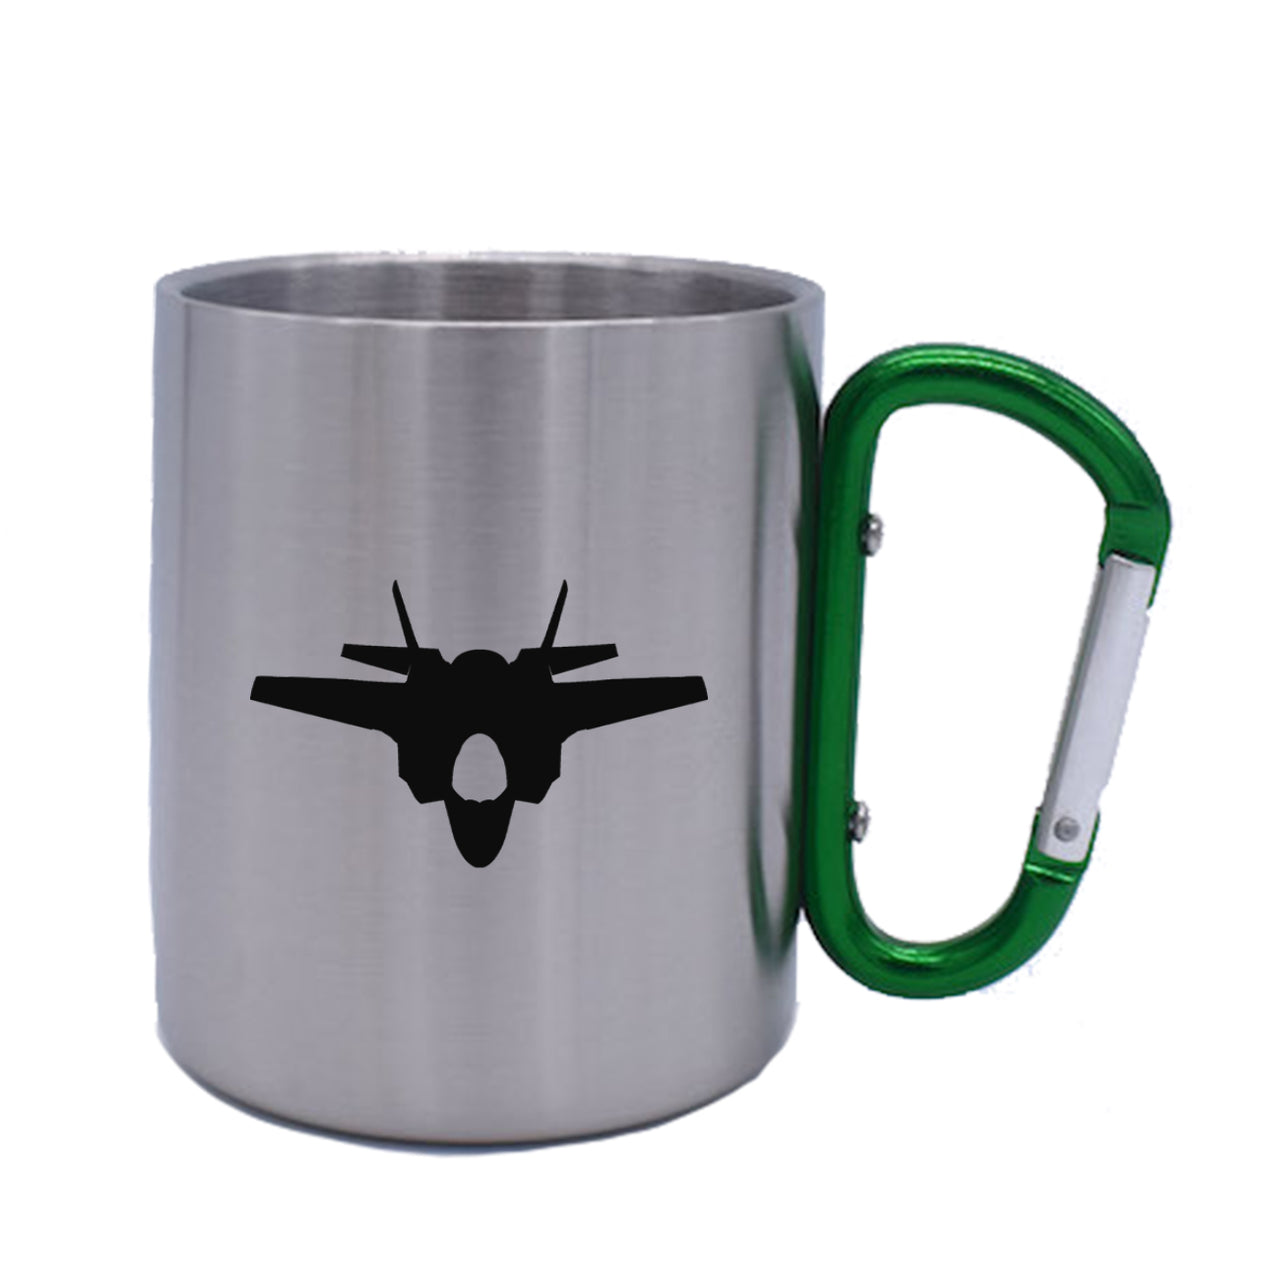 Lockheed Martin F-35 Lightning II Silhouette Designed Stainless Steel Outdoors Mugs